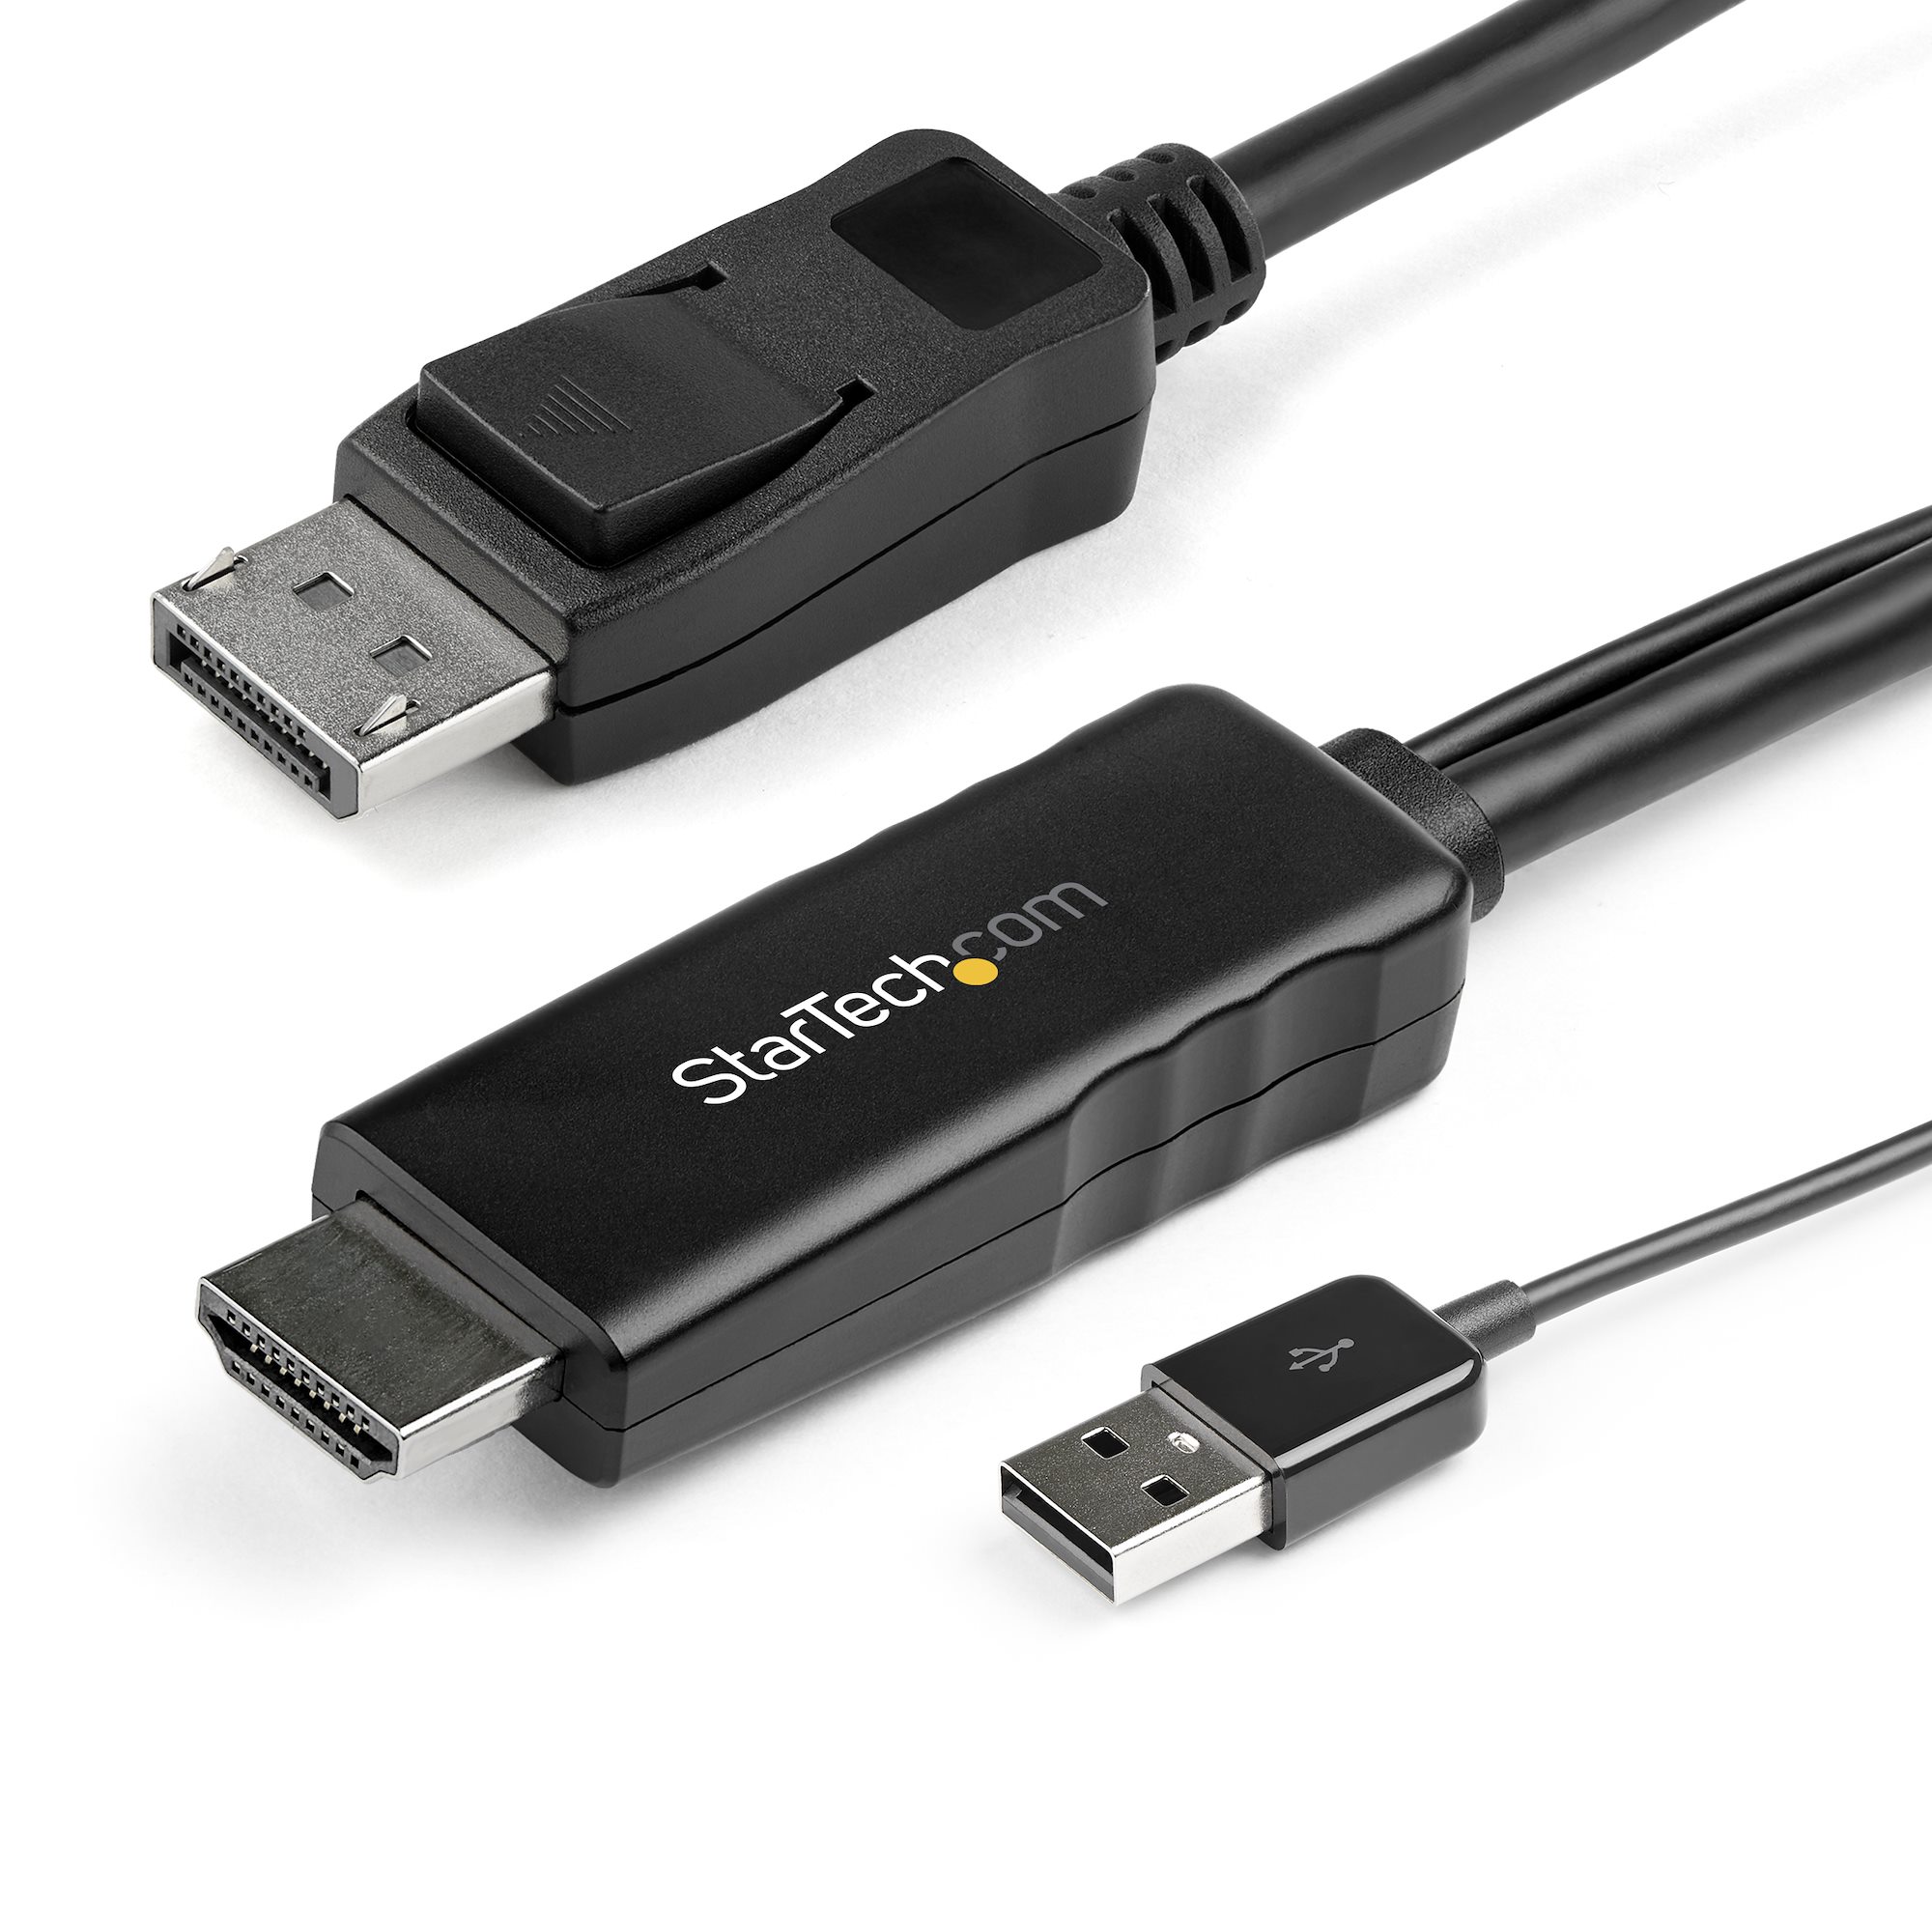 StarTech.com VGA to HDMI Portable Adapter Converter w/ USB Audio and Power